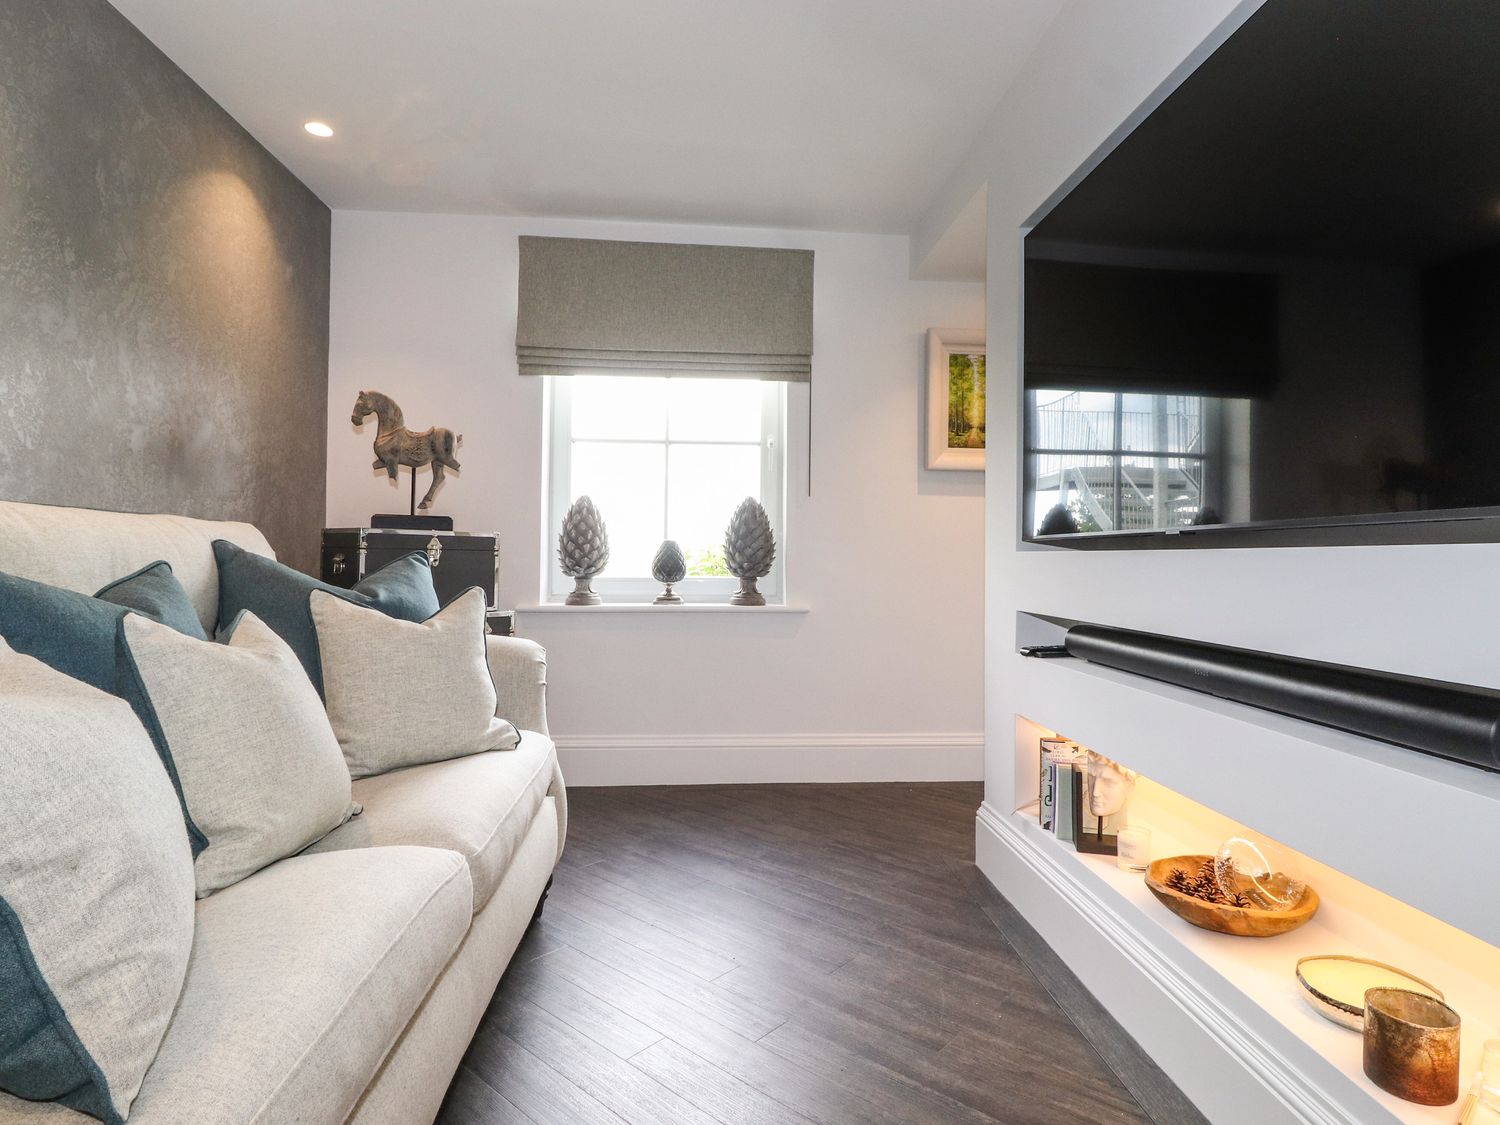 Suite Retreat nr Penruddock, Cumbria. Ground-floor apartment, ideal for couples. On-site facilities.